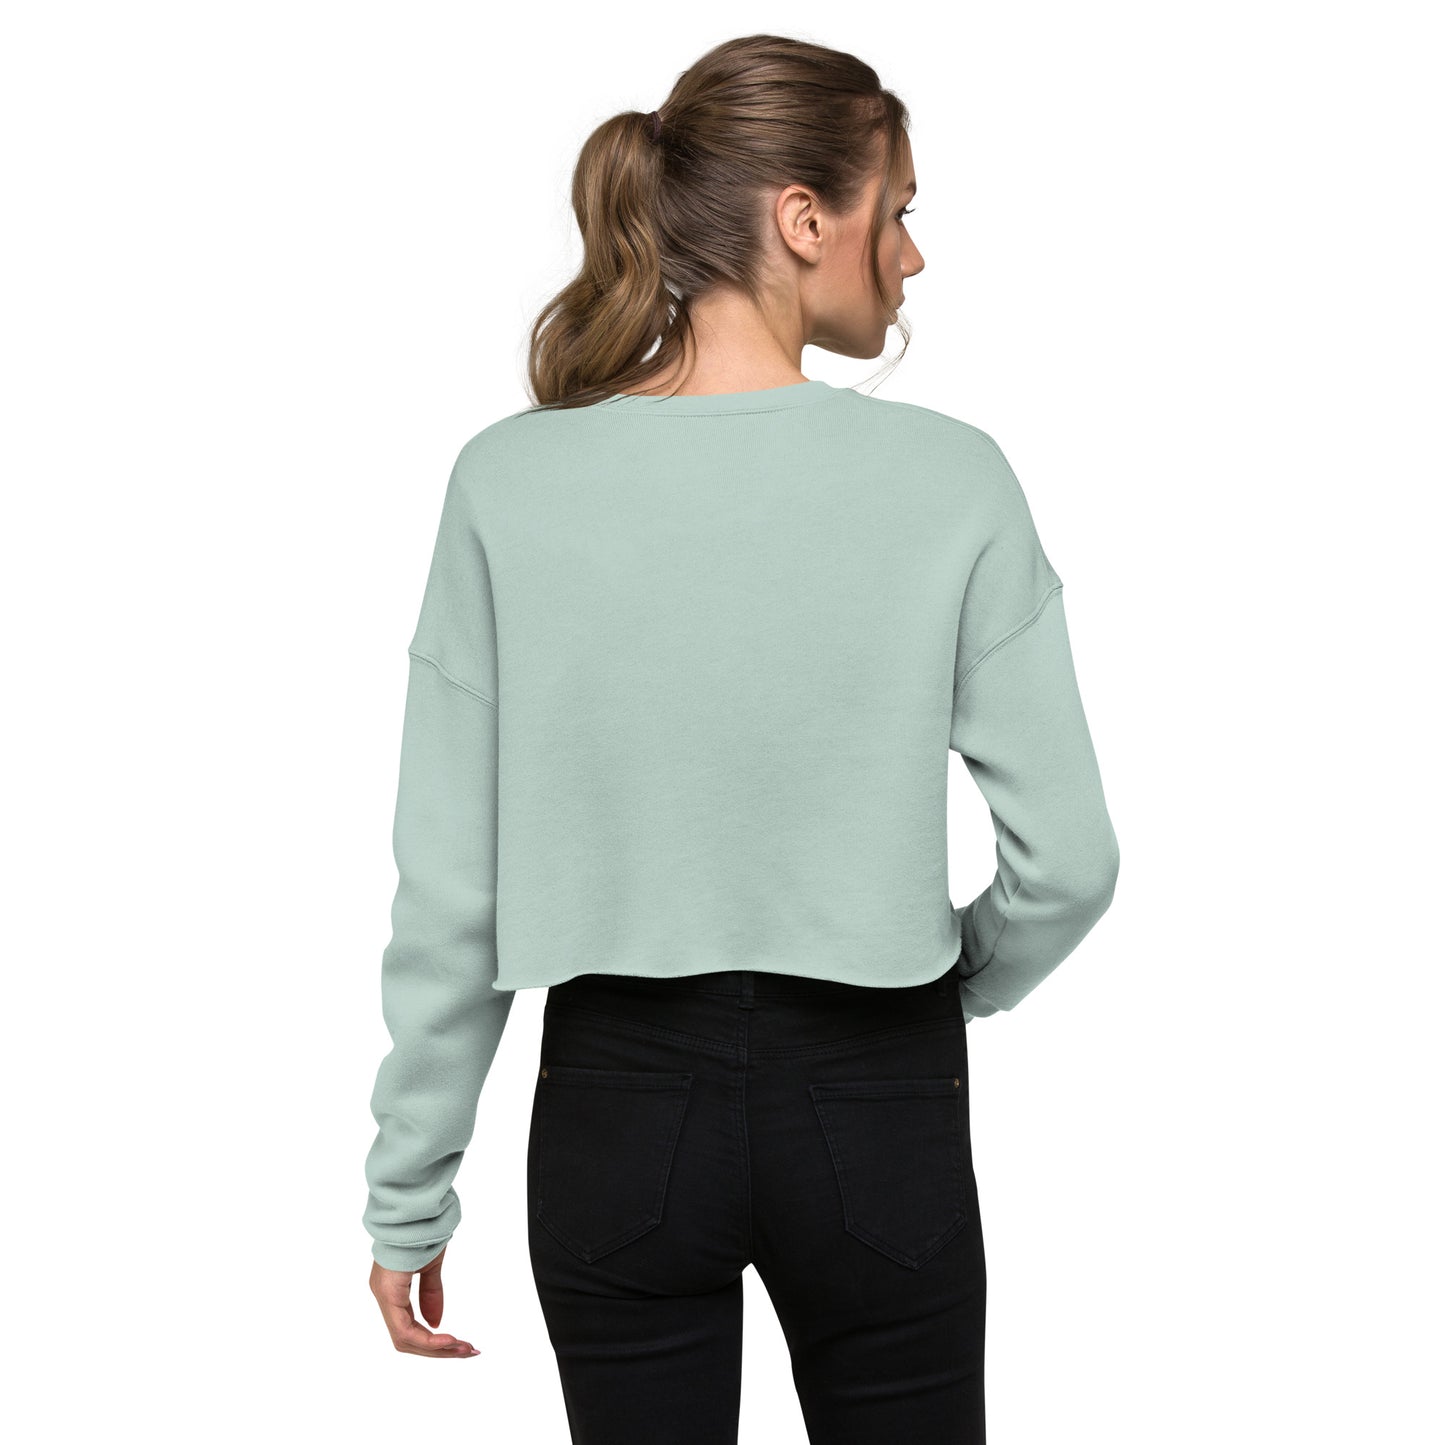 Crop Sweatshirt Womens (Hug Me - Inspiration 0011)